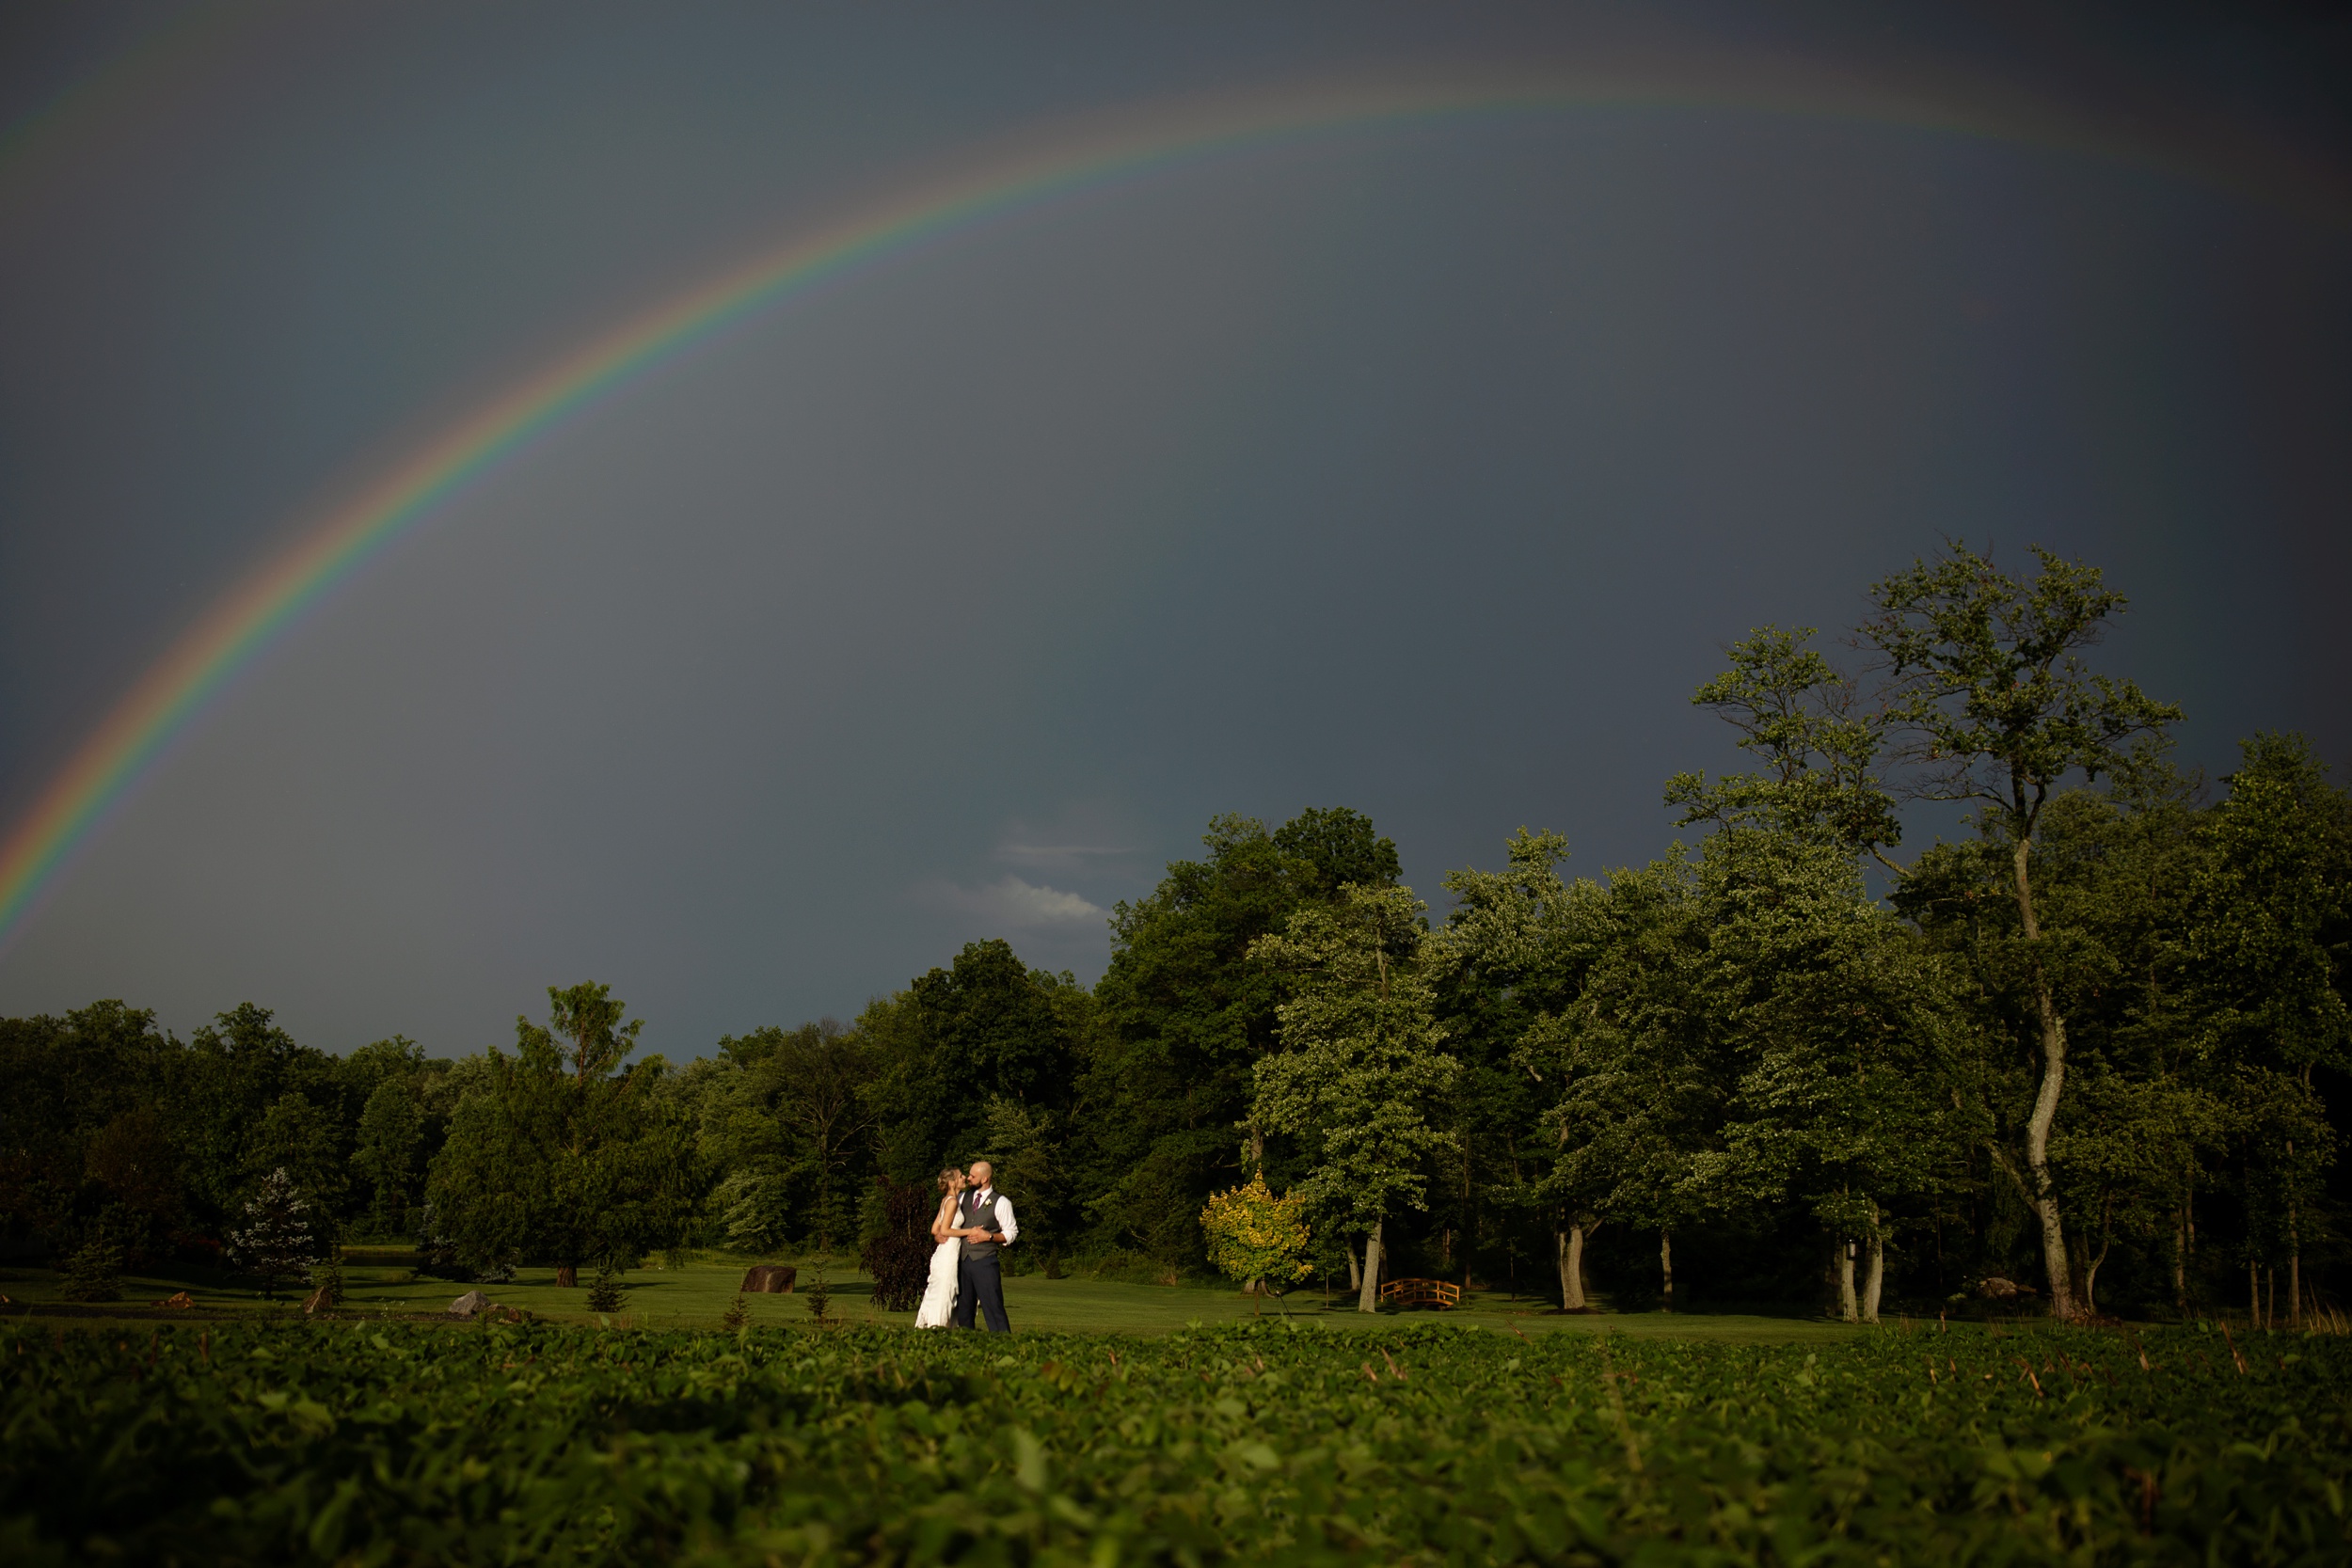 Brandywine Manor House Wedding, Summer Romantic Farm Wedding captured by Lancaster-Philadelphia Wedding Photographer Janae Rose Photography